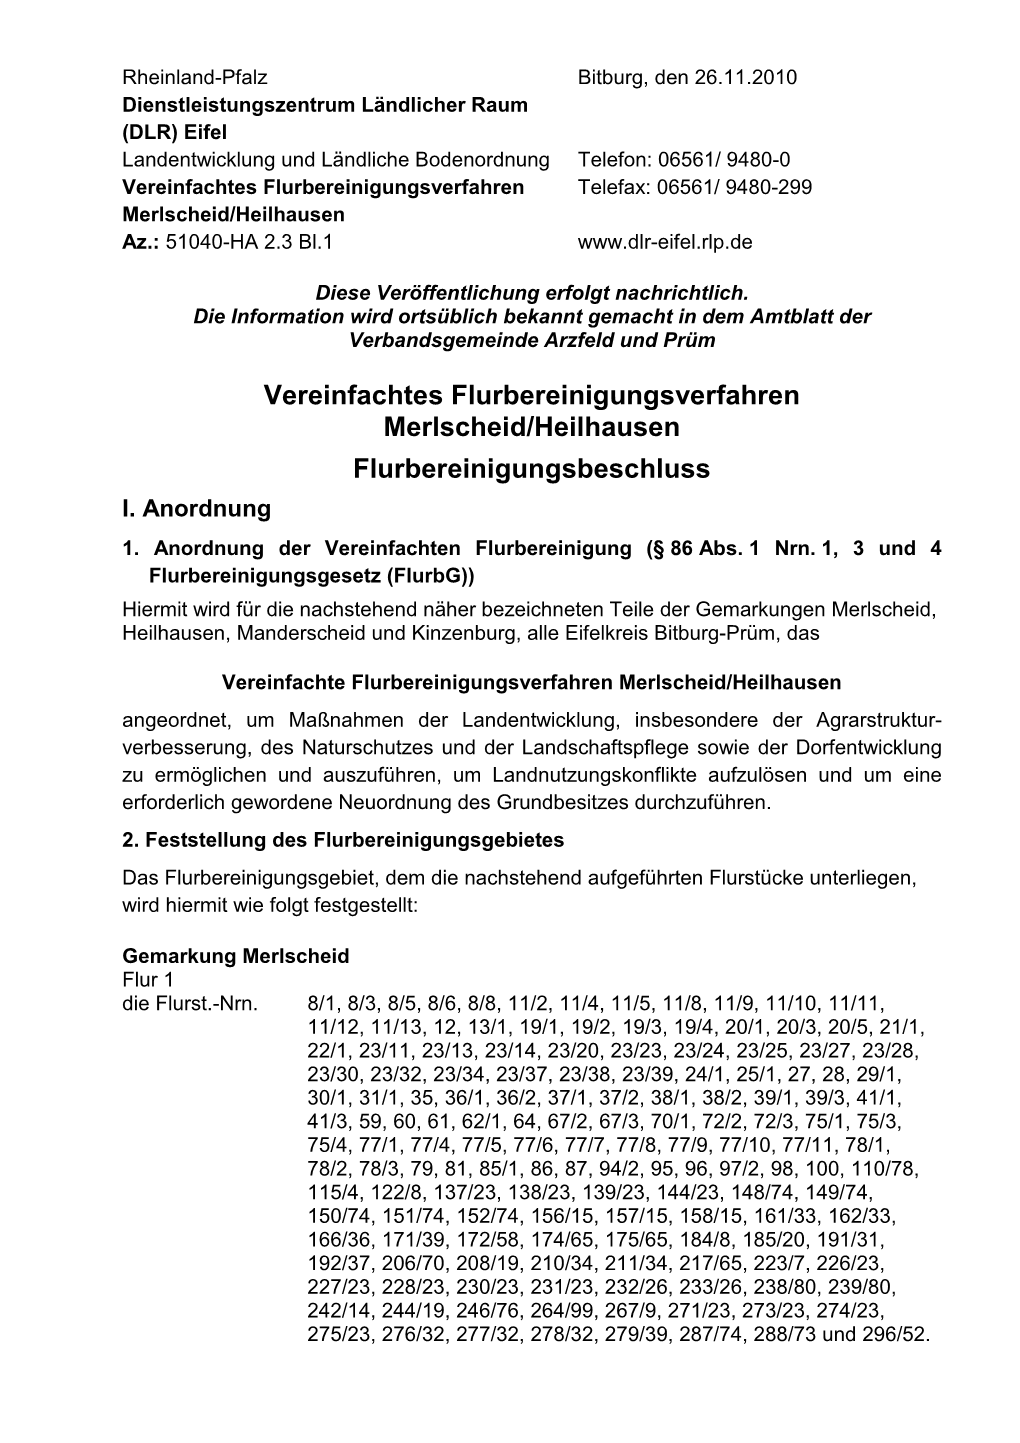 Vereinfachtes Flurbereinigungsverfahren Telefax: 06561/ 9480-299 Merlscheid/Heilhausen Az.: 51040-HA 2.3 Bl.1